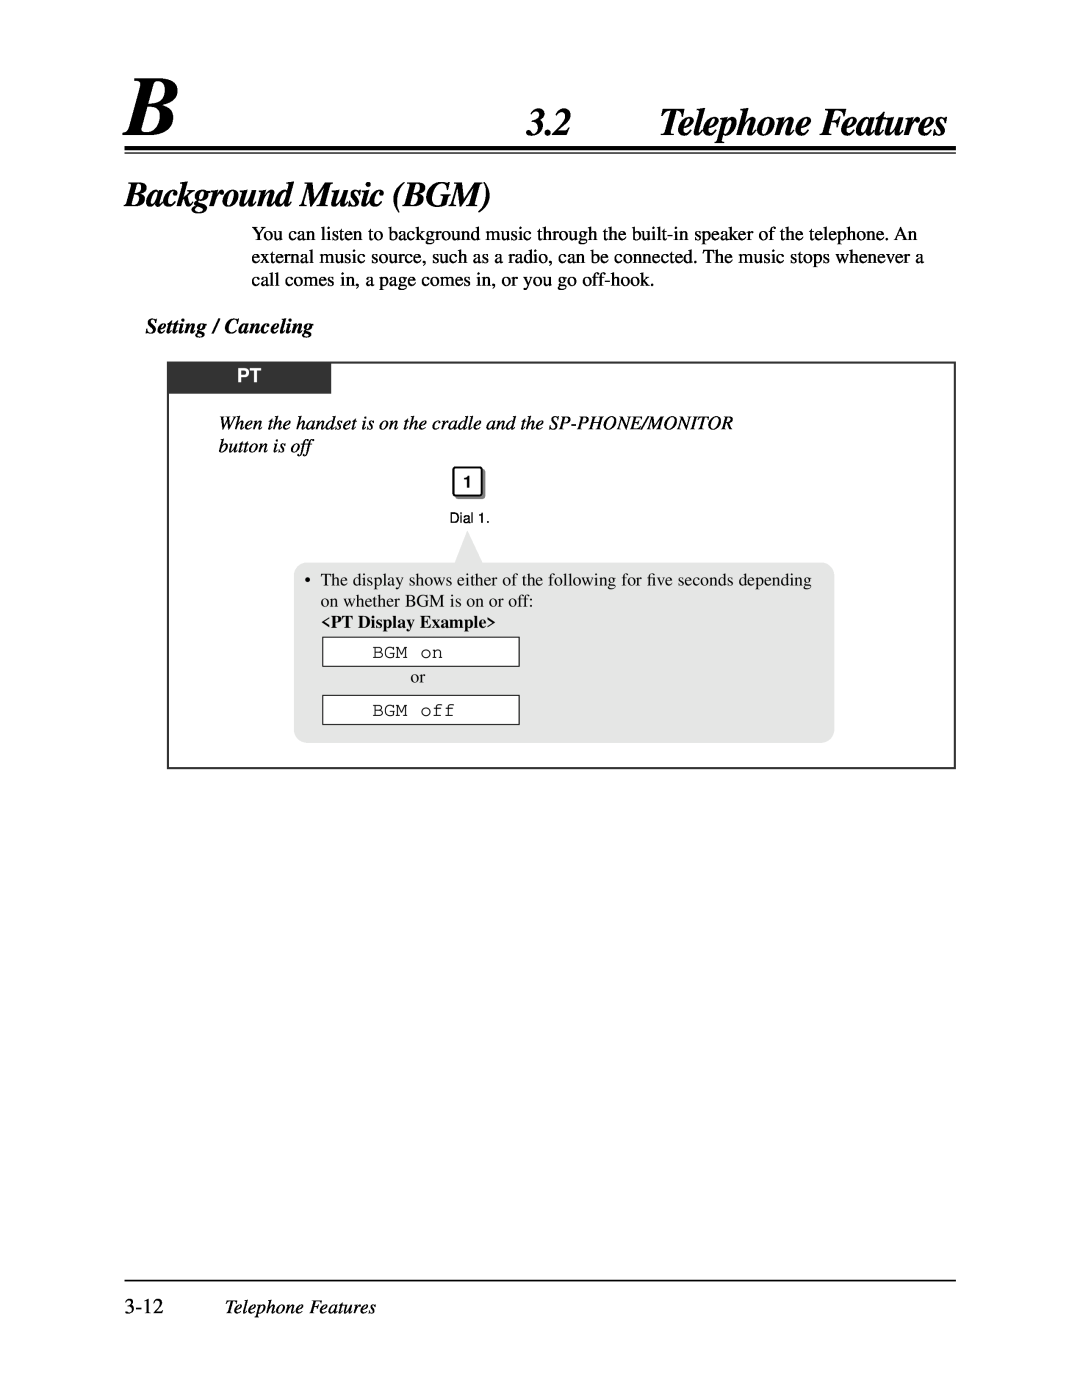 Panasonic KX-TA624 user manual Background Music BGM, Setting / Canceling, 3.2Telephone Features 